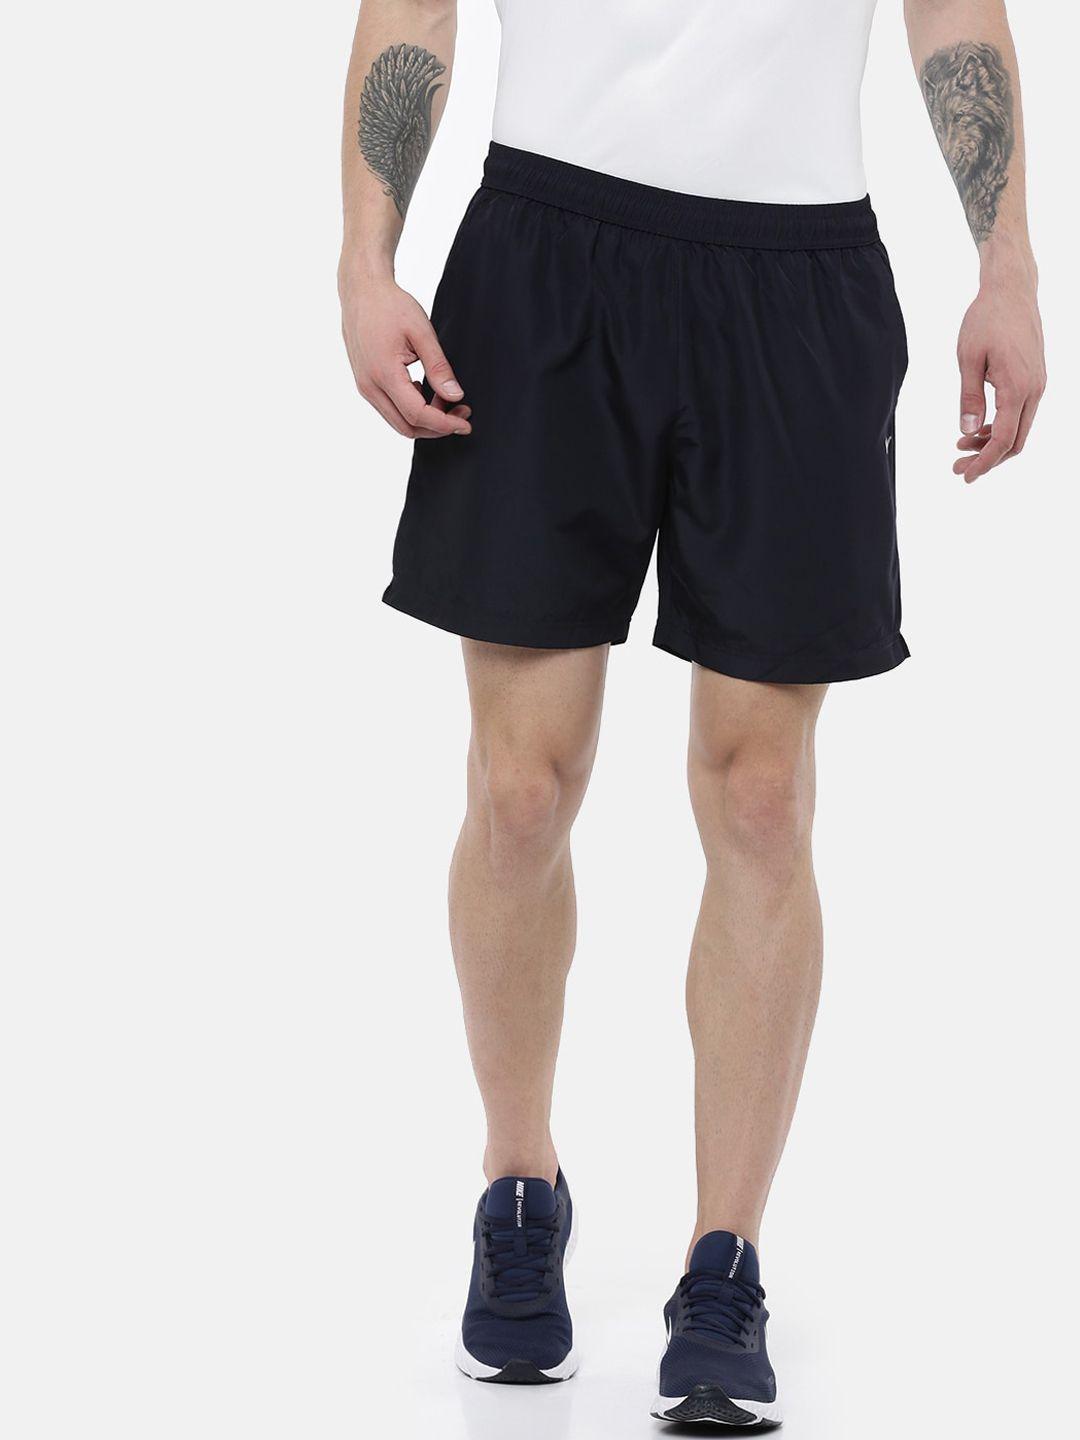 wildcraft men navy blue solid mid-rise running sports shorts